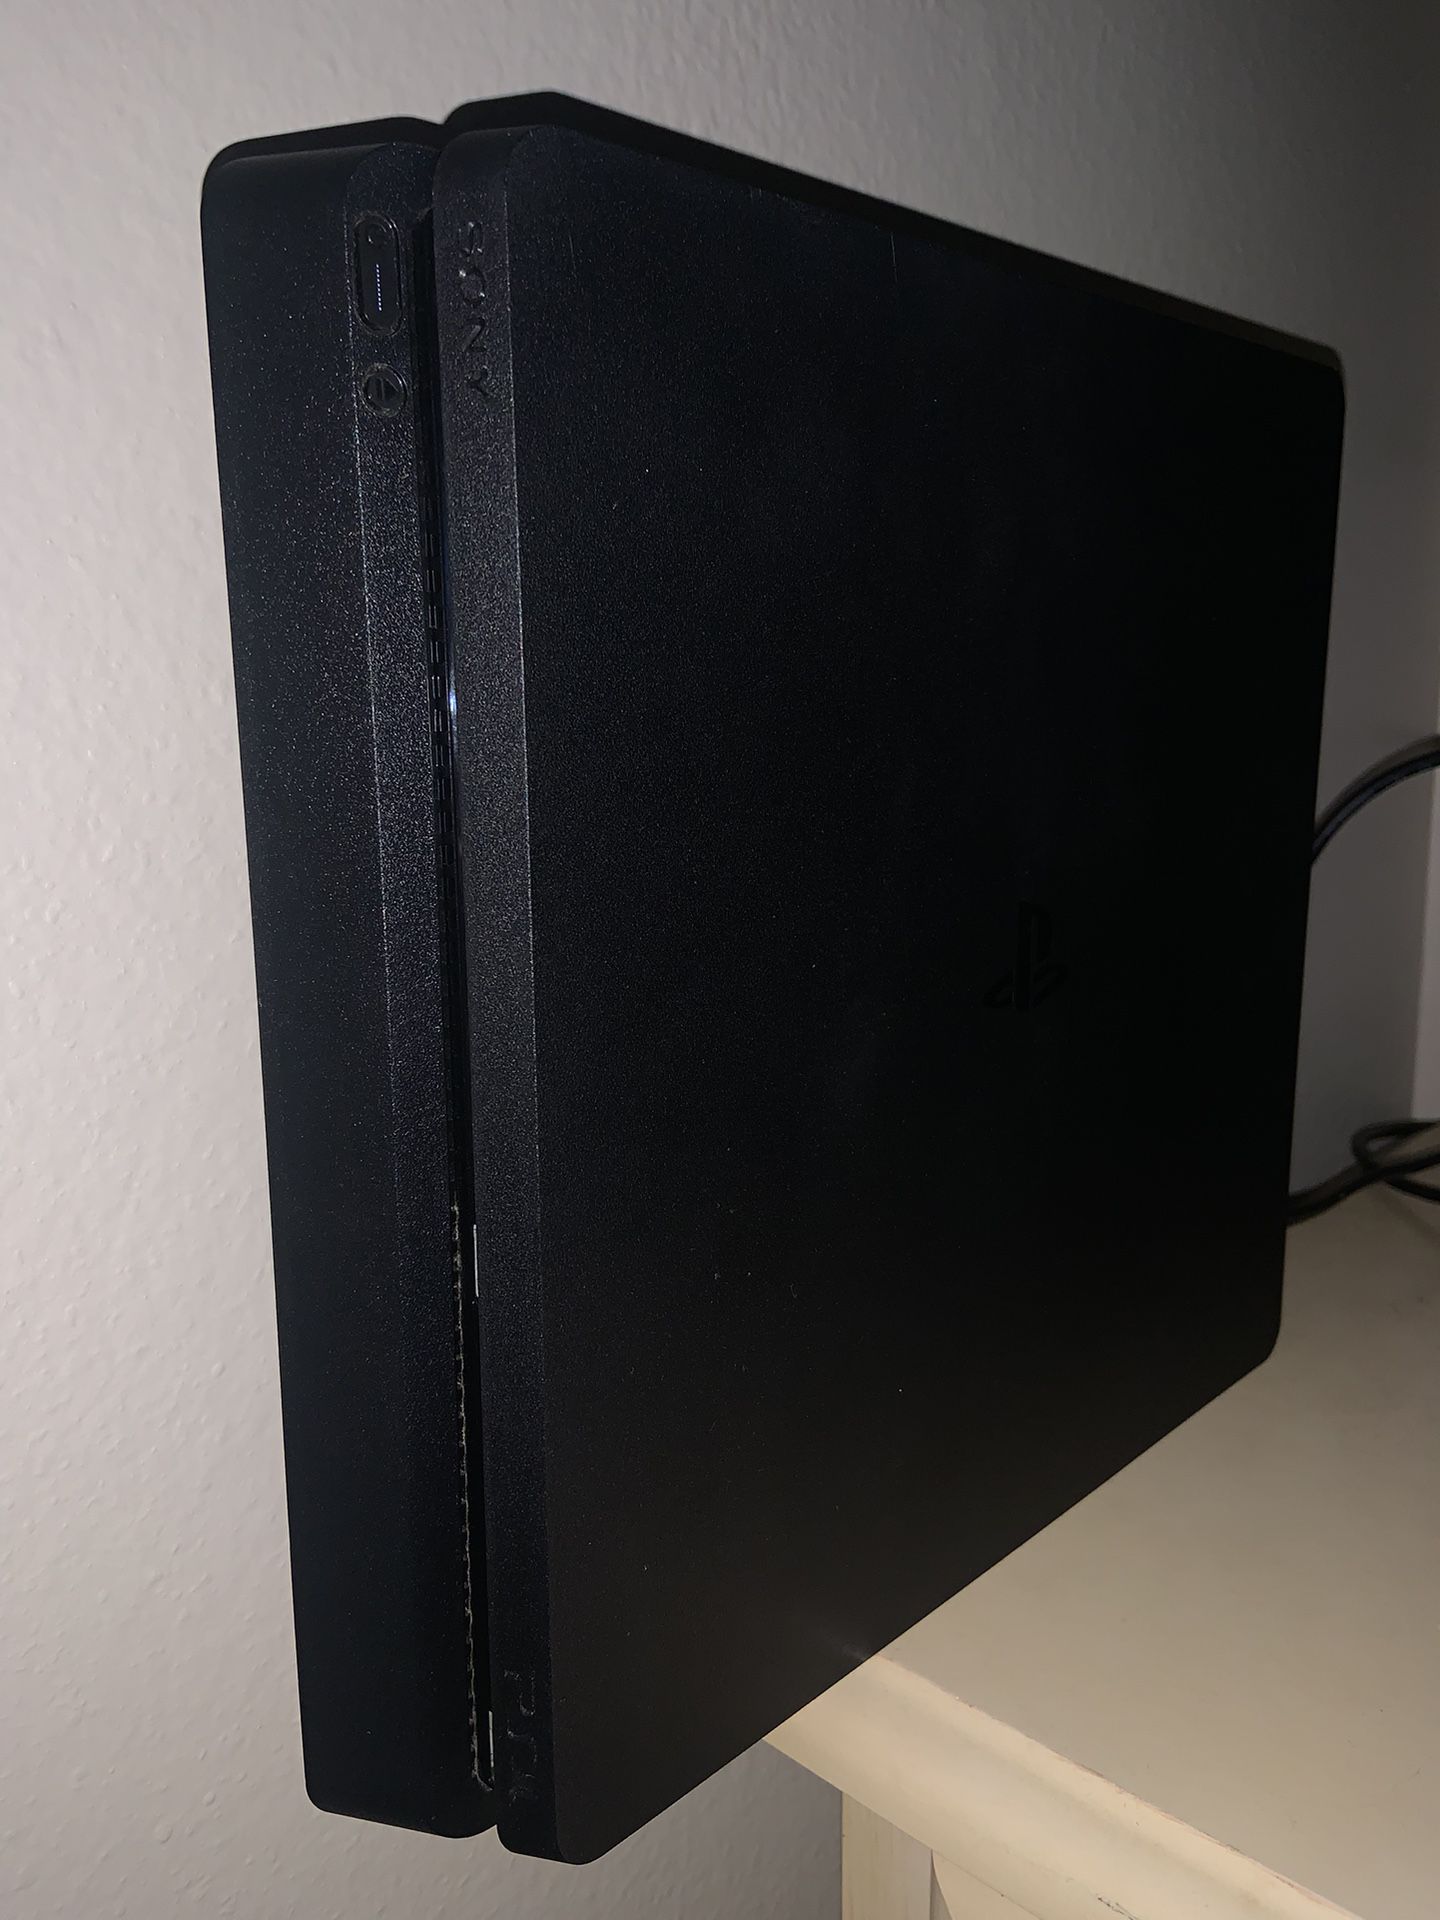 Sony PlayStation 4 (800 GB Slim) Jet Black 